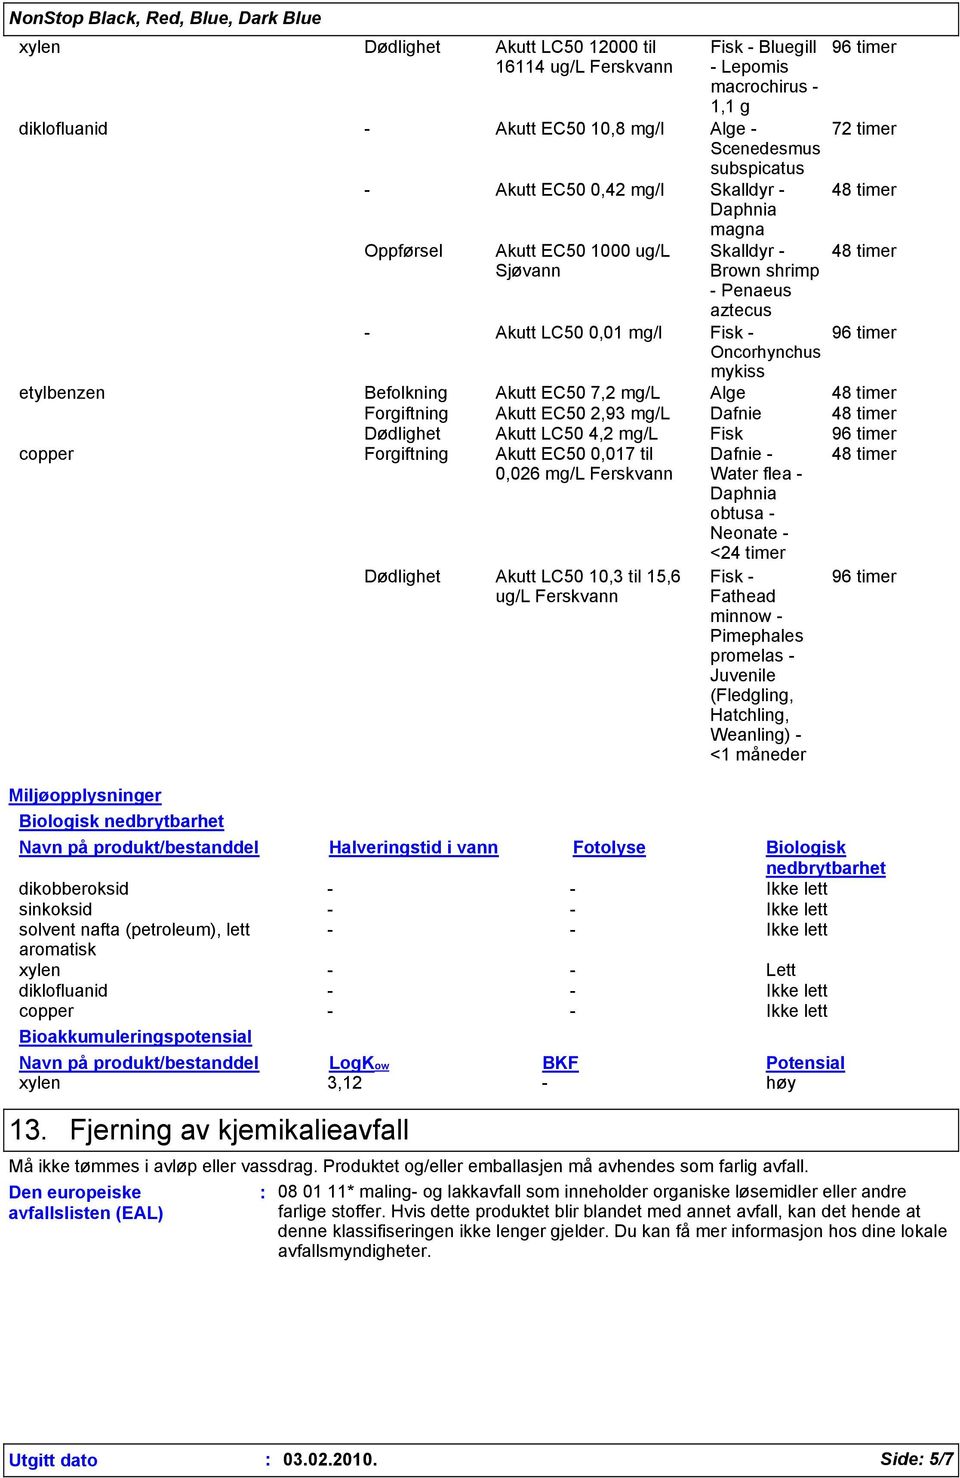 Bioakkumuleringspotensial Fisk - Bluegill - Lepomis macrochirus - 1,1 g diklofluanid - Akutt EC50 10,8 mg/l Alge - Scenedesmus subspicatus - Akutt EC50 0,42 mg/l Skalldyr - Oppførsel Akutt EC50 1000